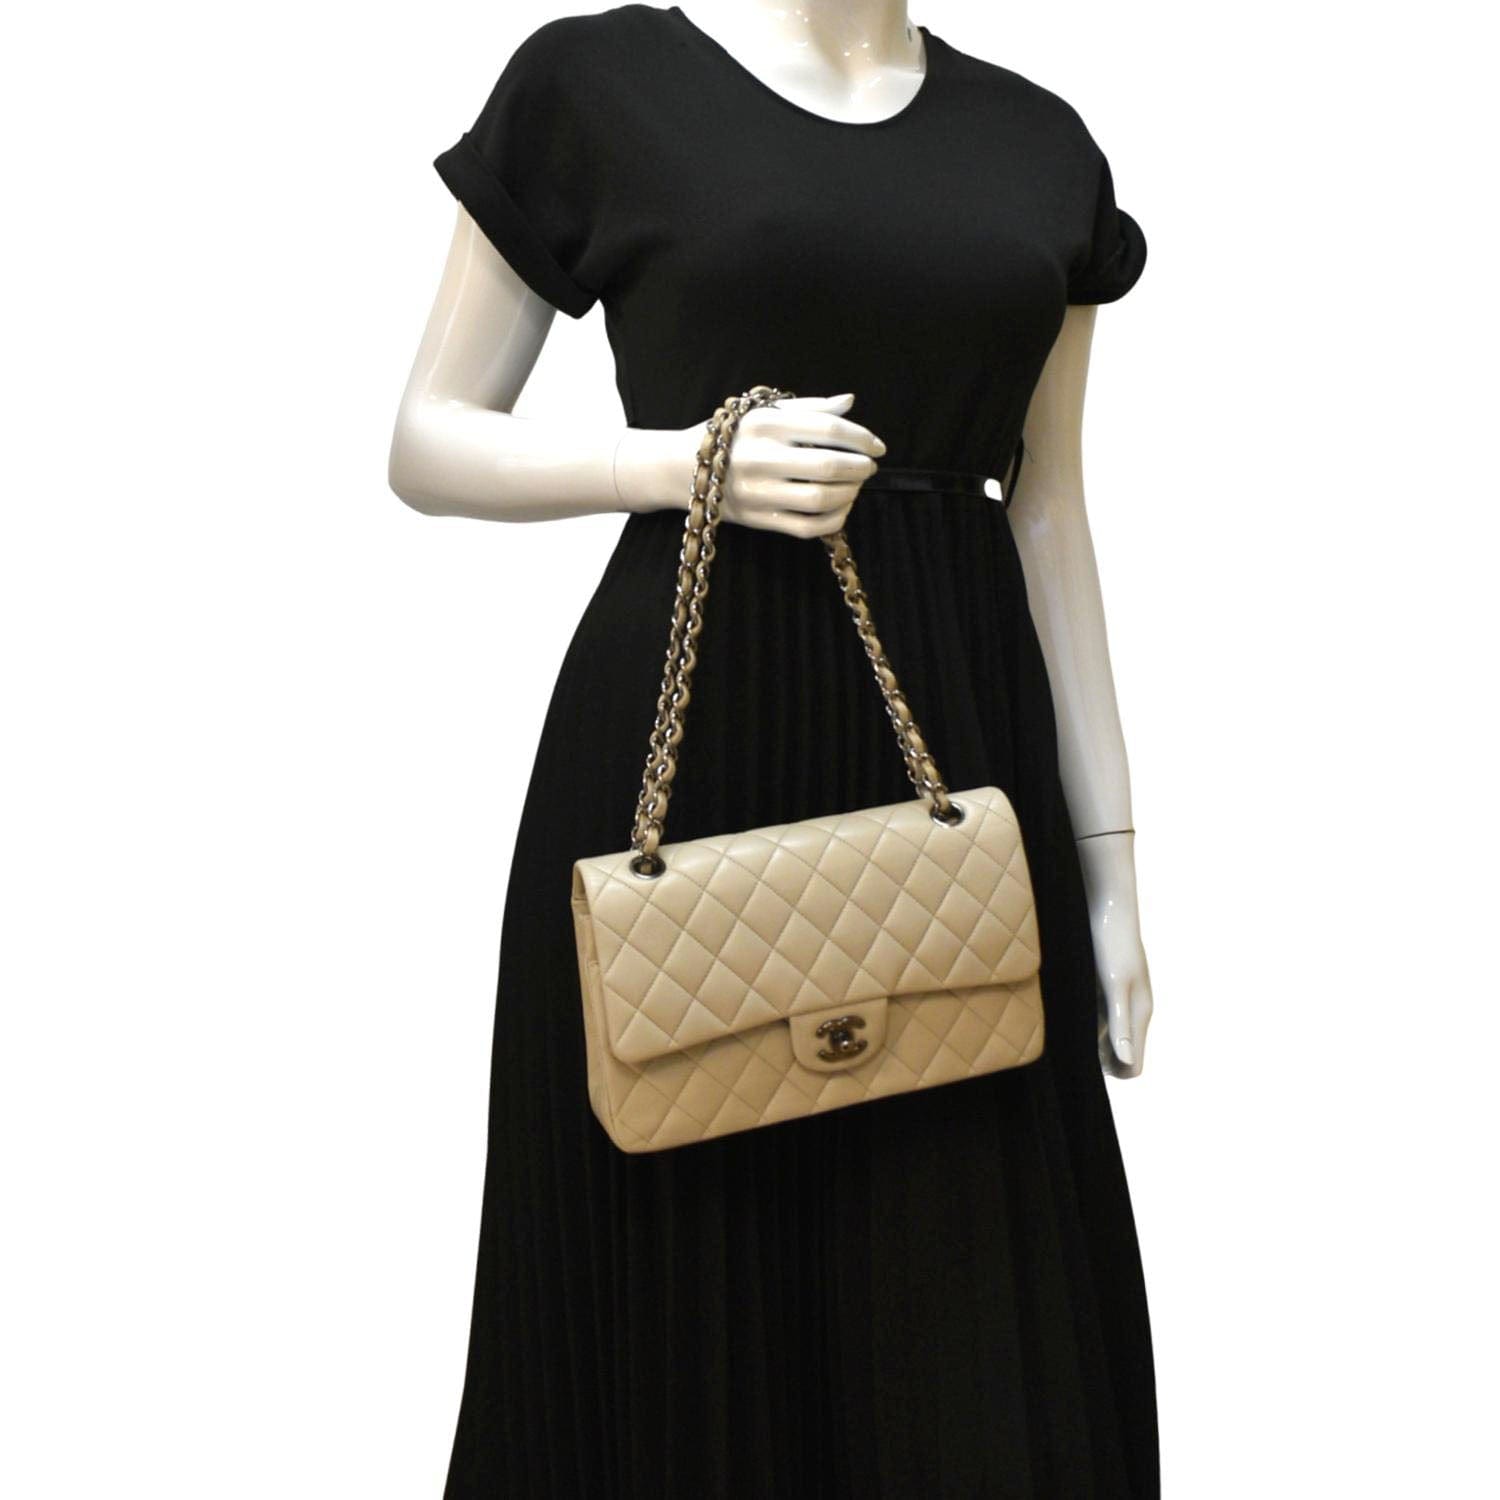 Chanel Classic Double Flap Leather Shoulder Bag